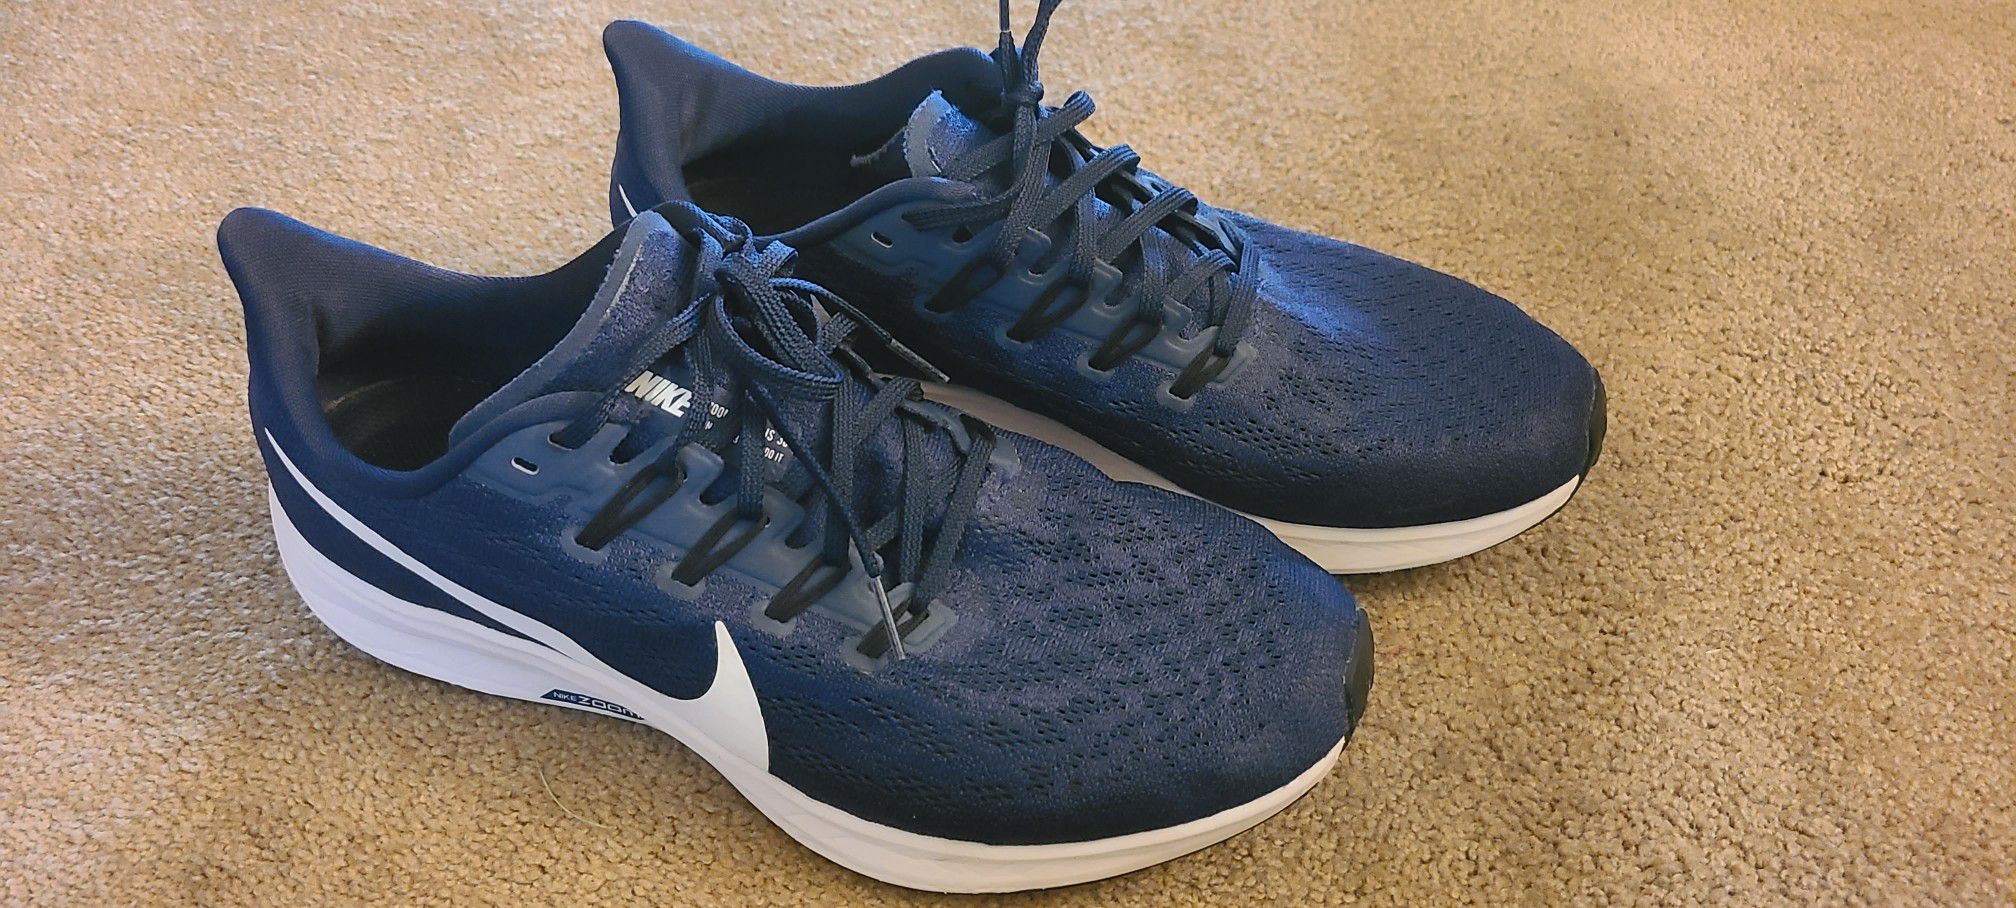 Nike Air Zoom Pegasus 36 / Blue / Size 10 / Men Running Shoes / (Grade A)